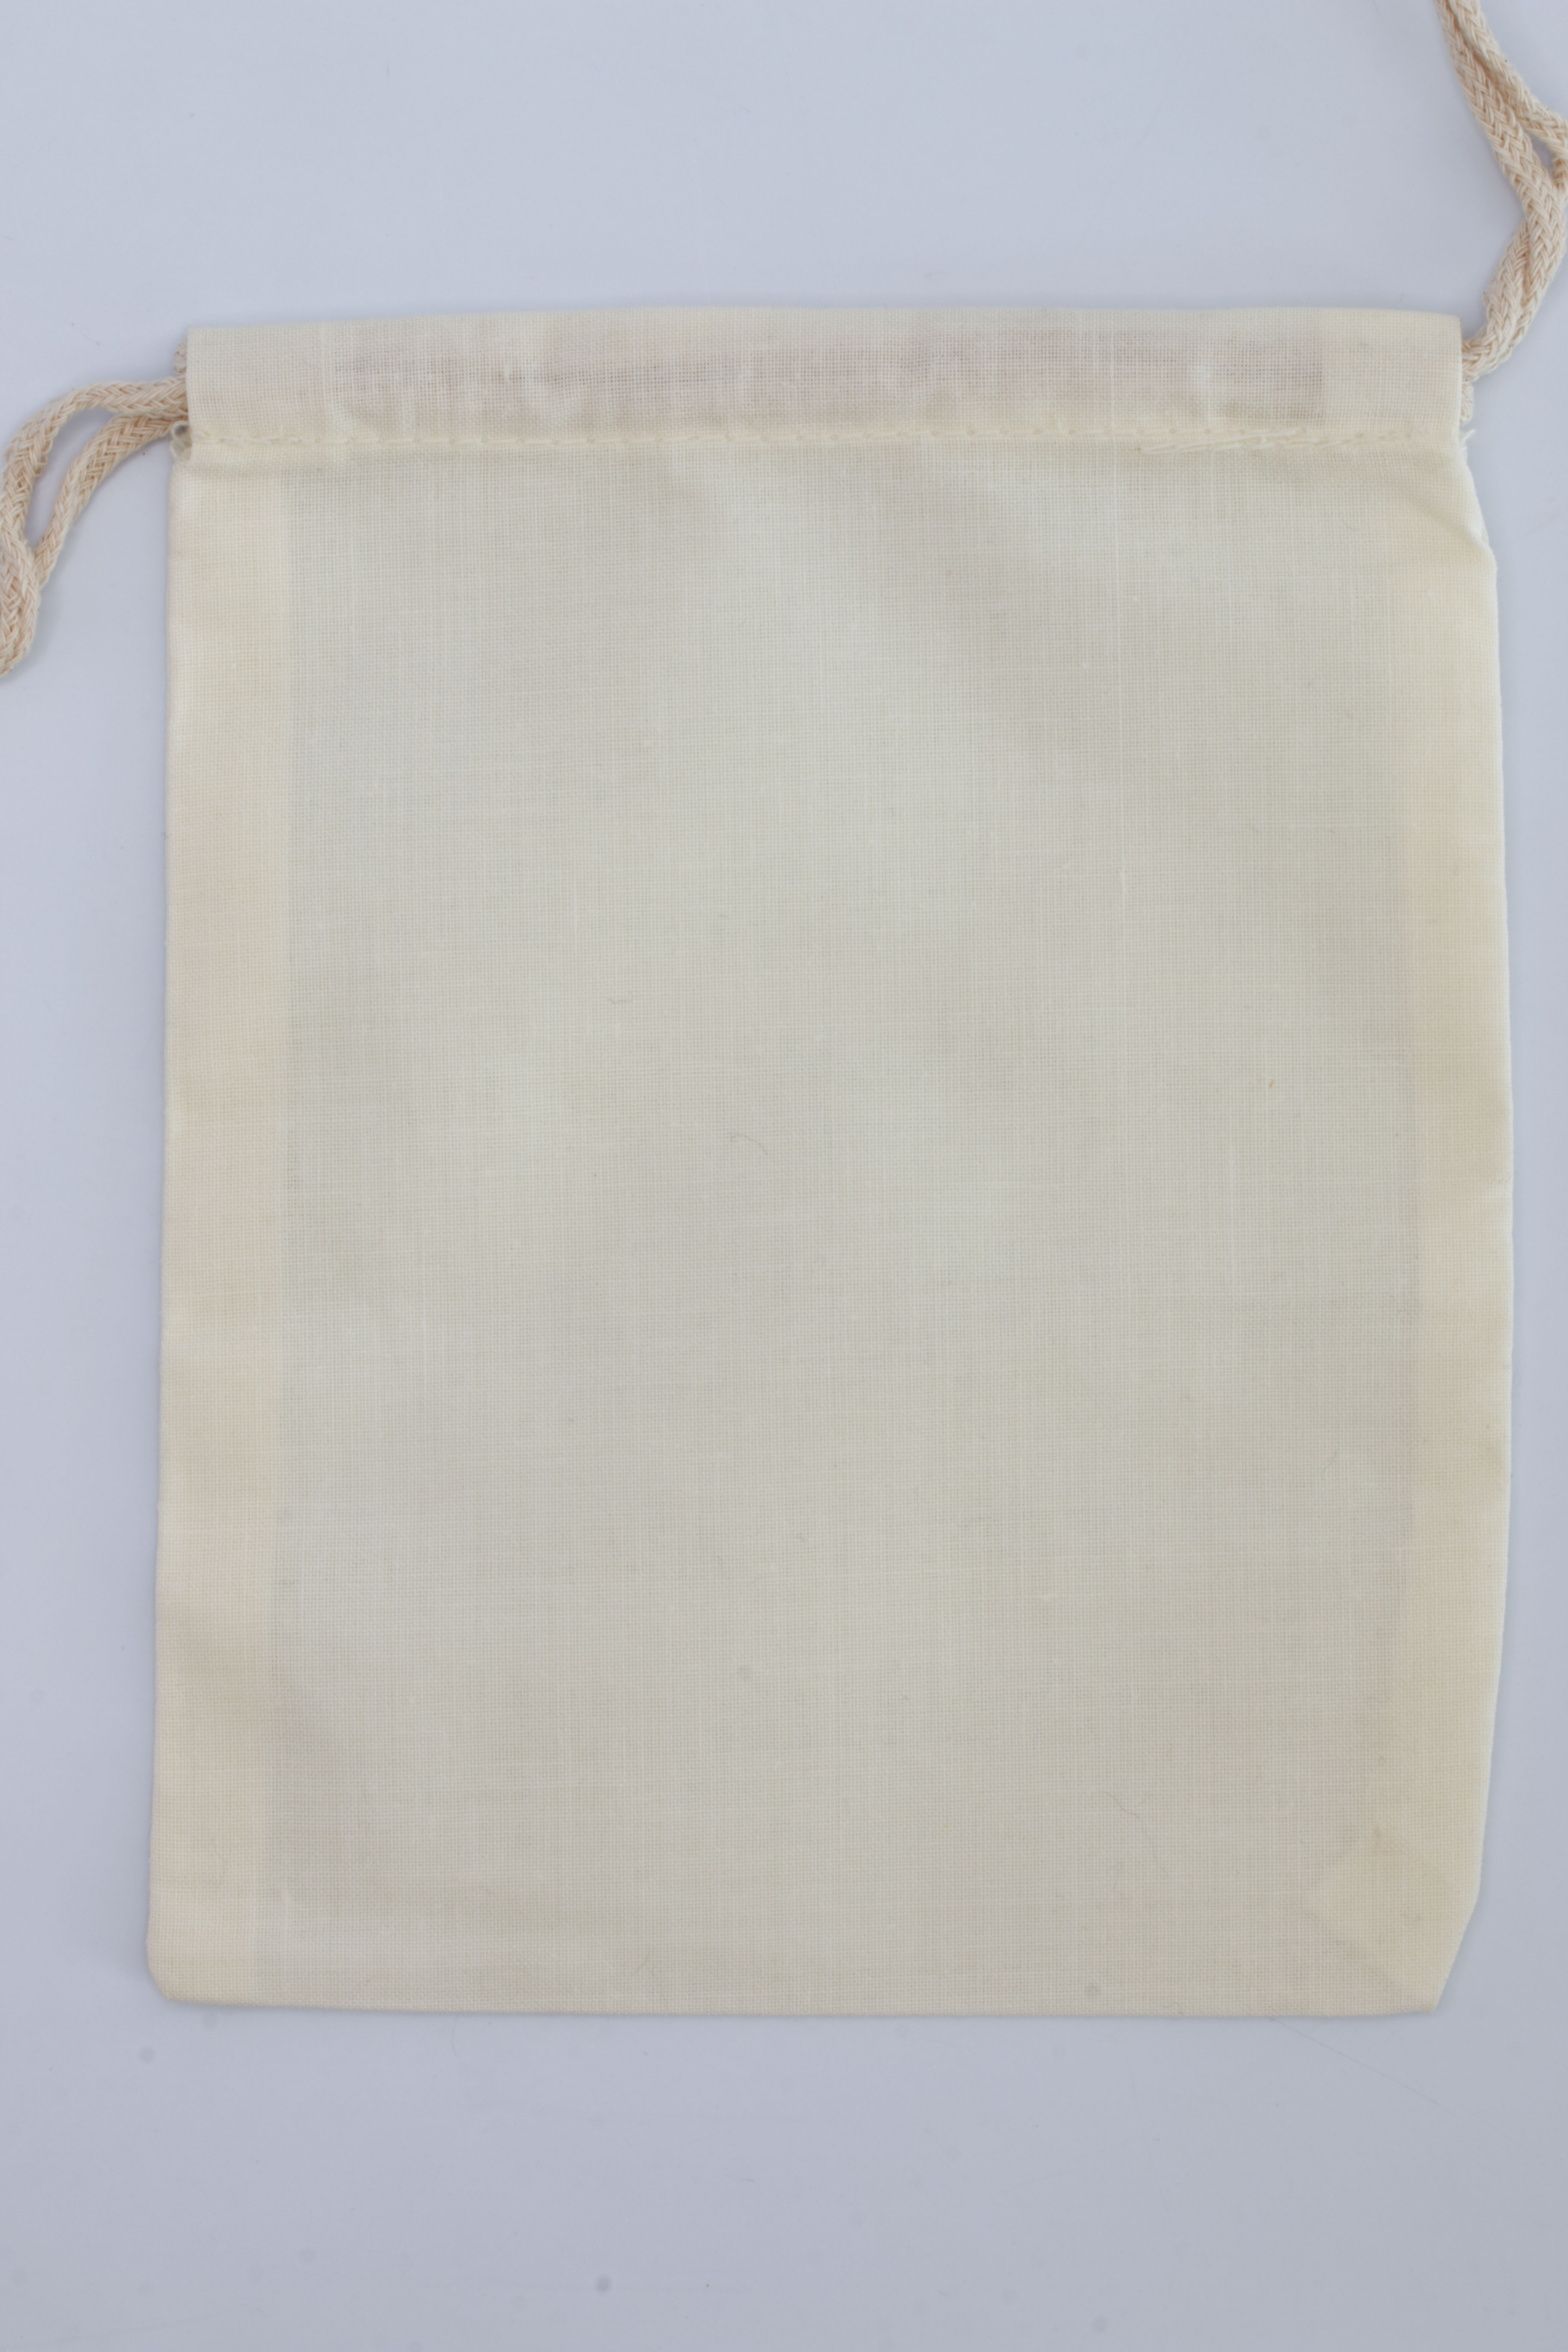 Cotton Muslin Double Drawstring Bags